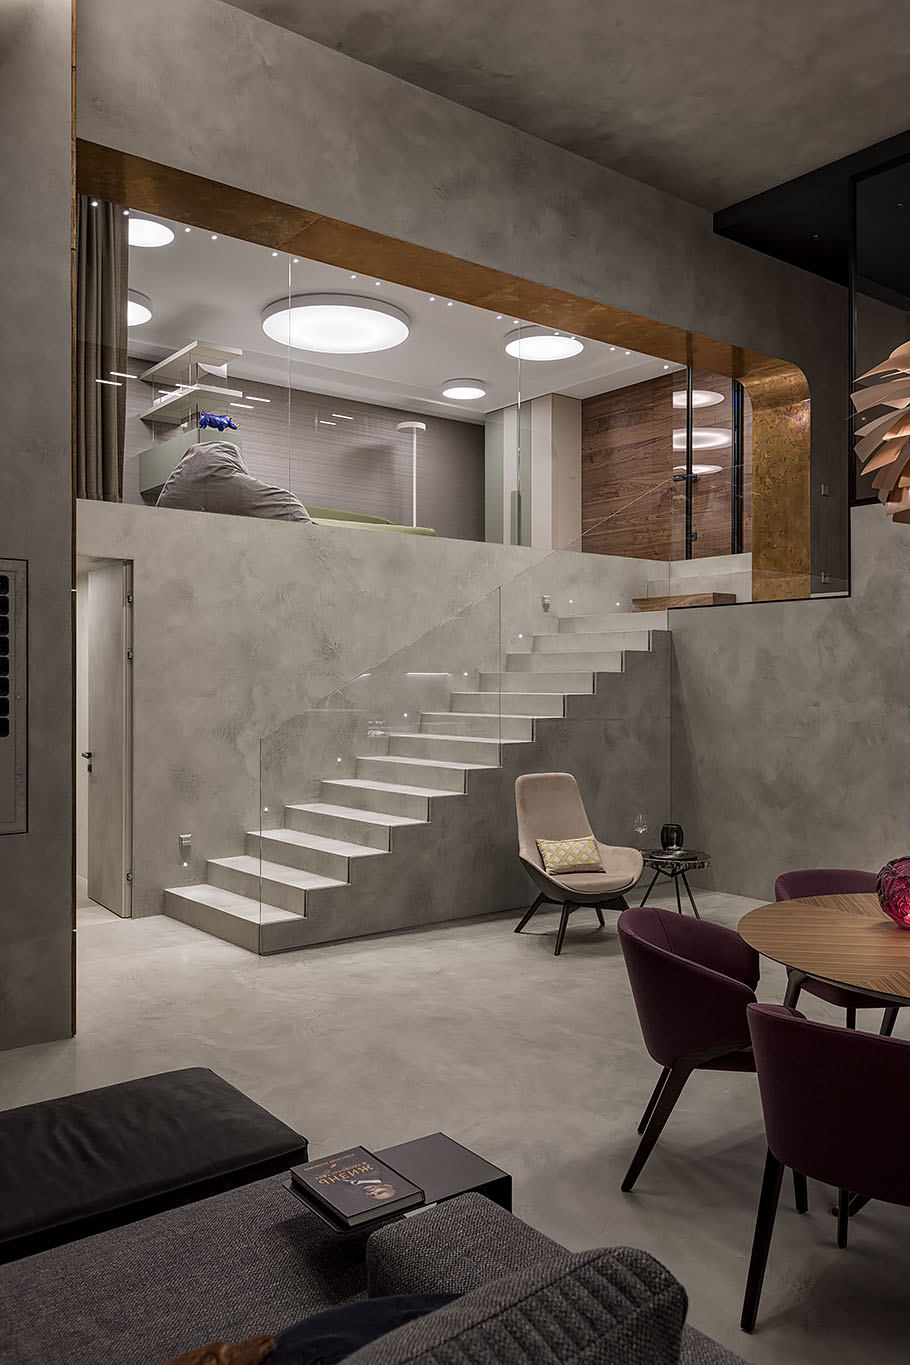 Luksuzni apartman s mikrocementom na zidovima, stepenicama i podu.